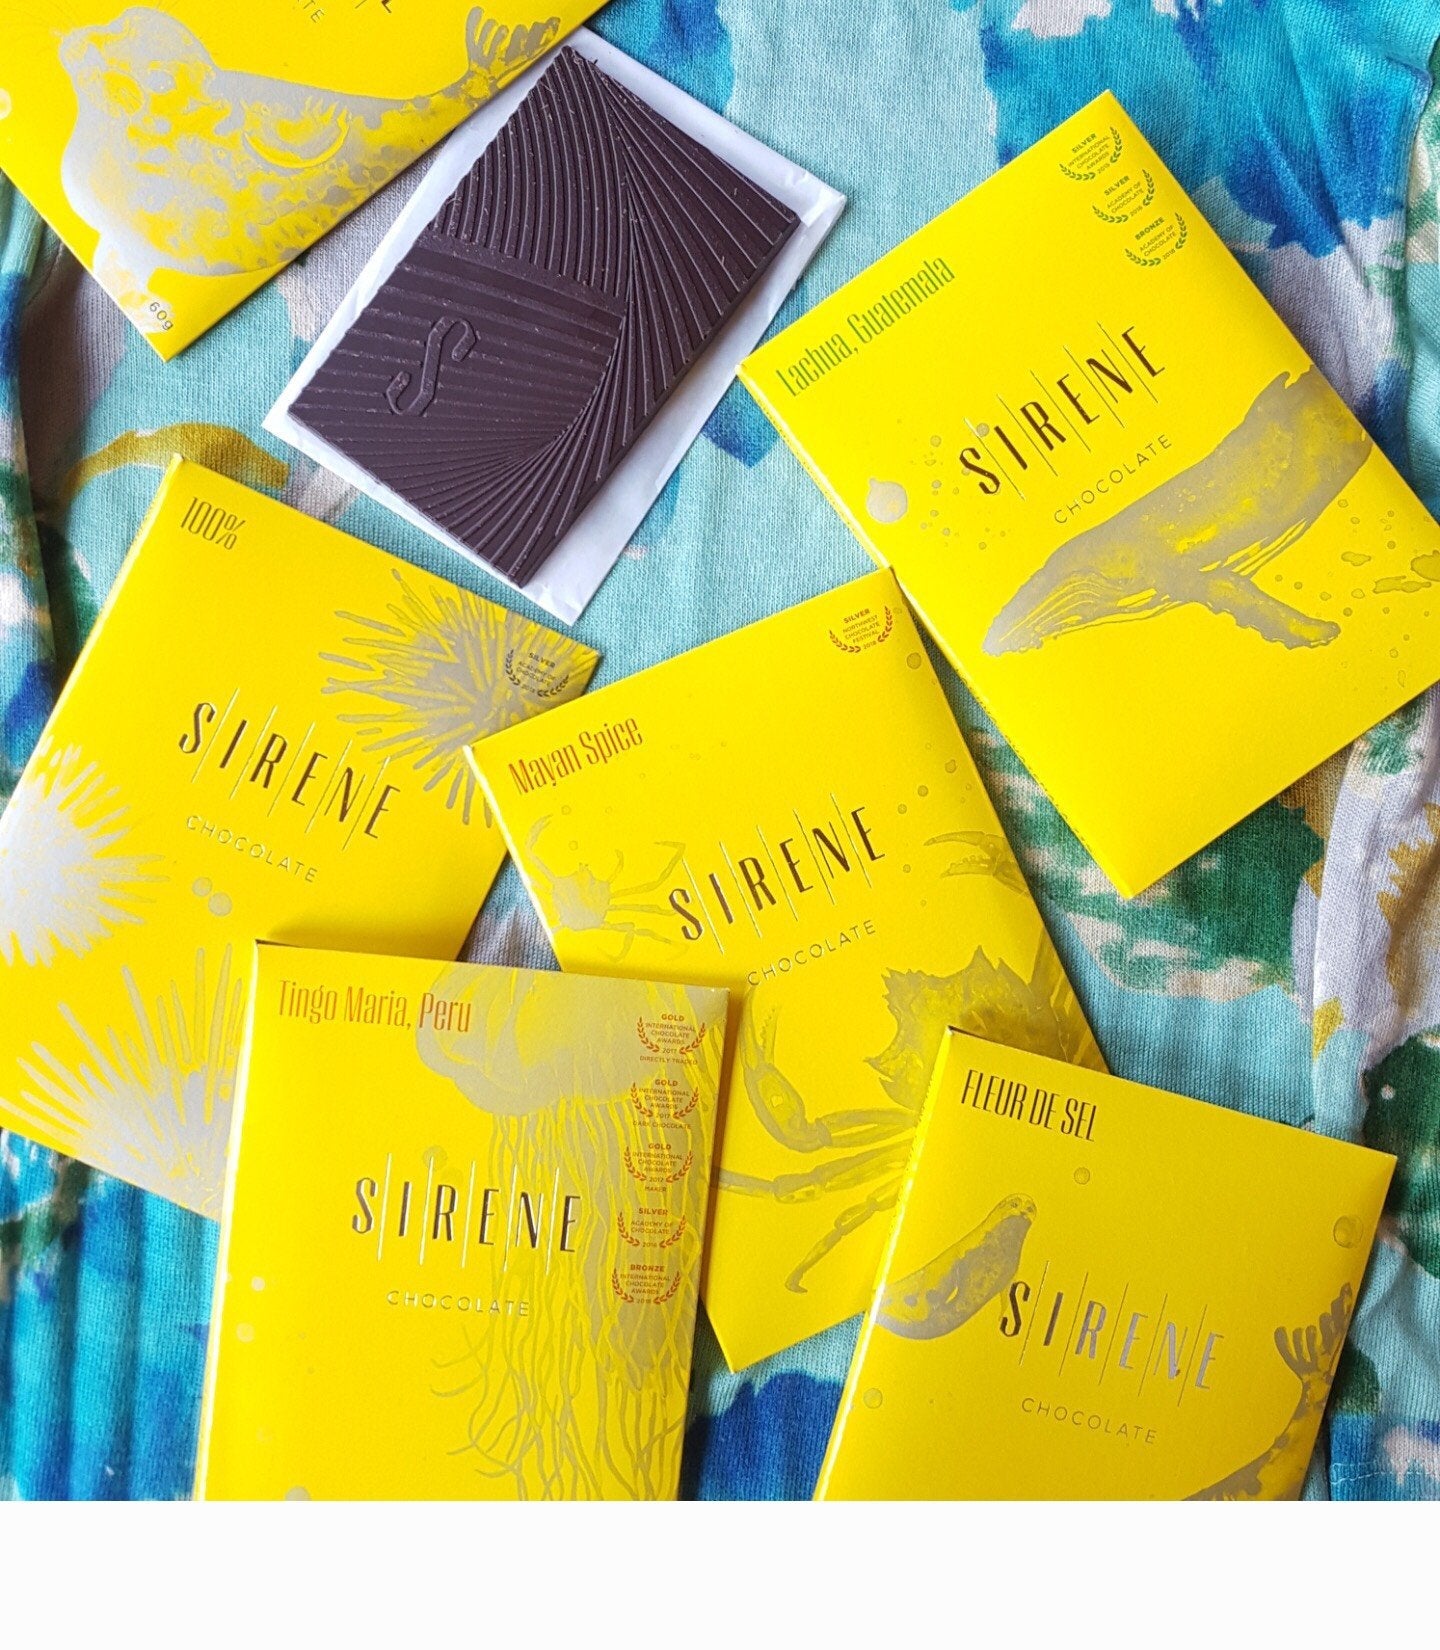 Sirene Chocolate Maker - Chocolate Collective Canada